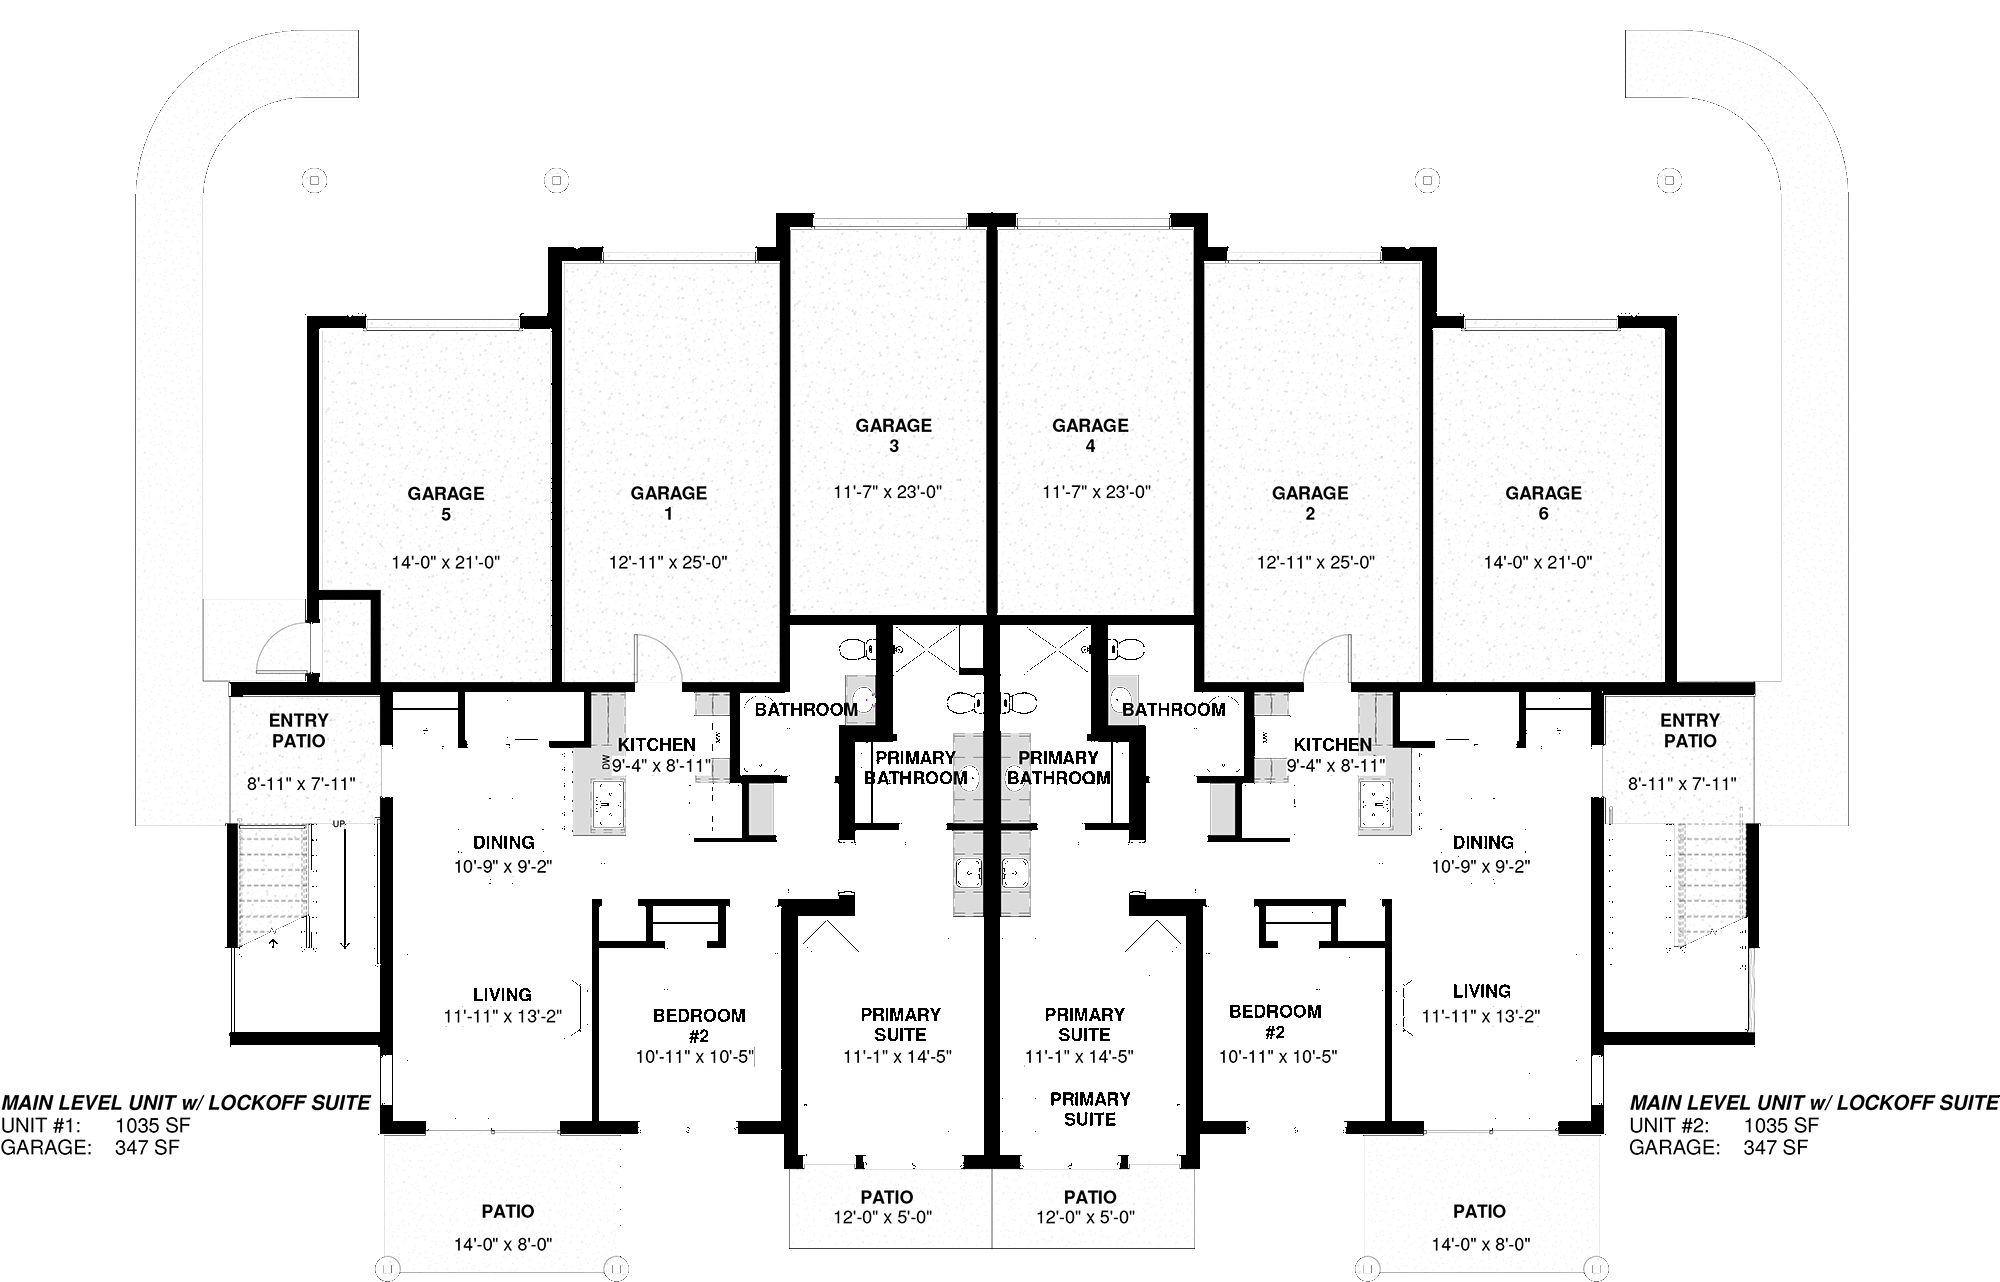 sunnyside flats floor plan including garages